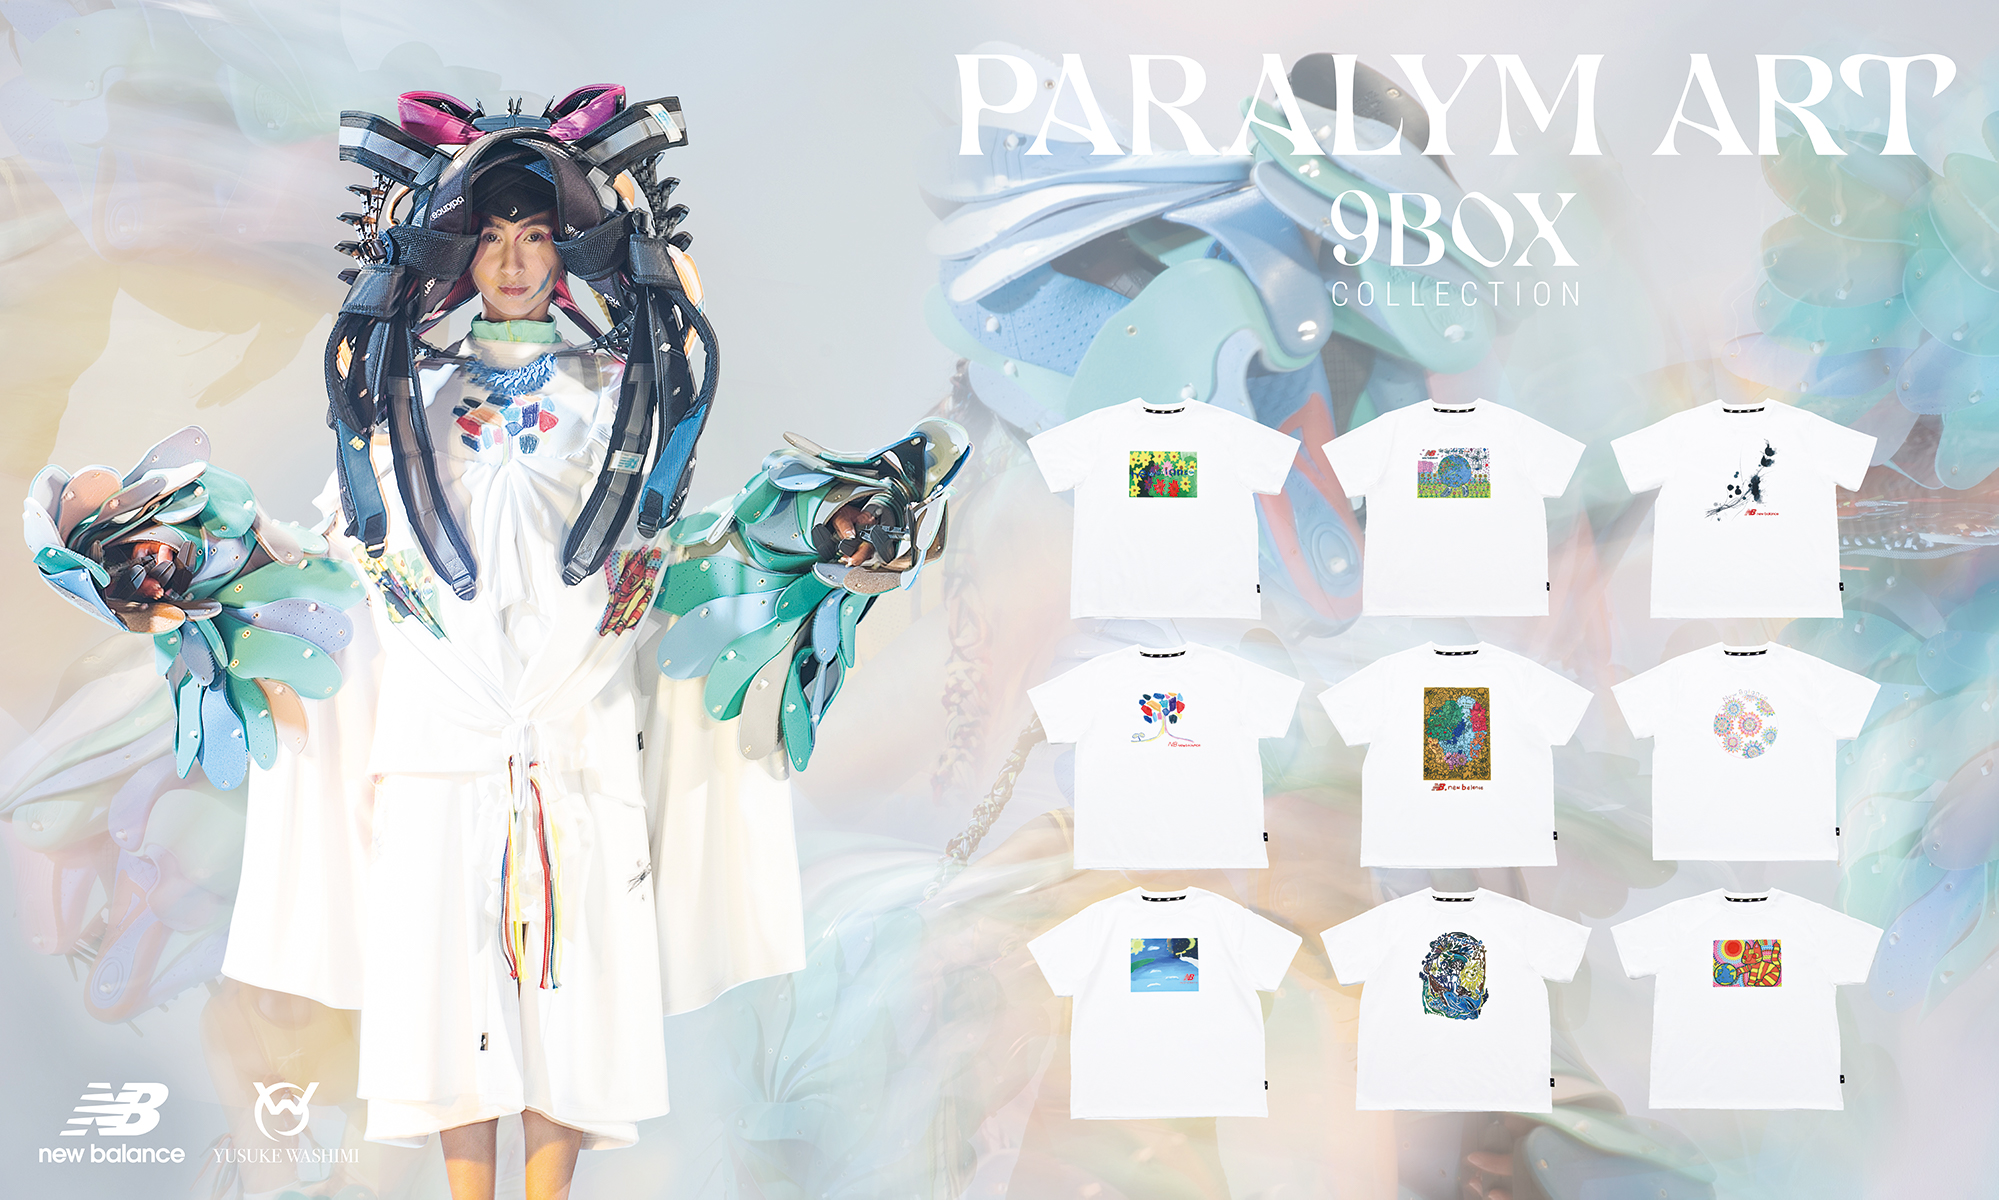 New Balance 全新 Paralym Art 9BOX 系列温暖问世